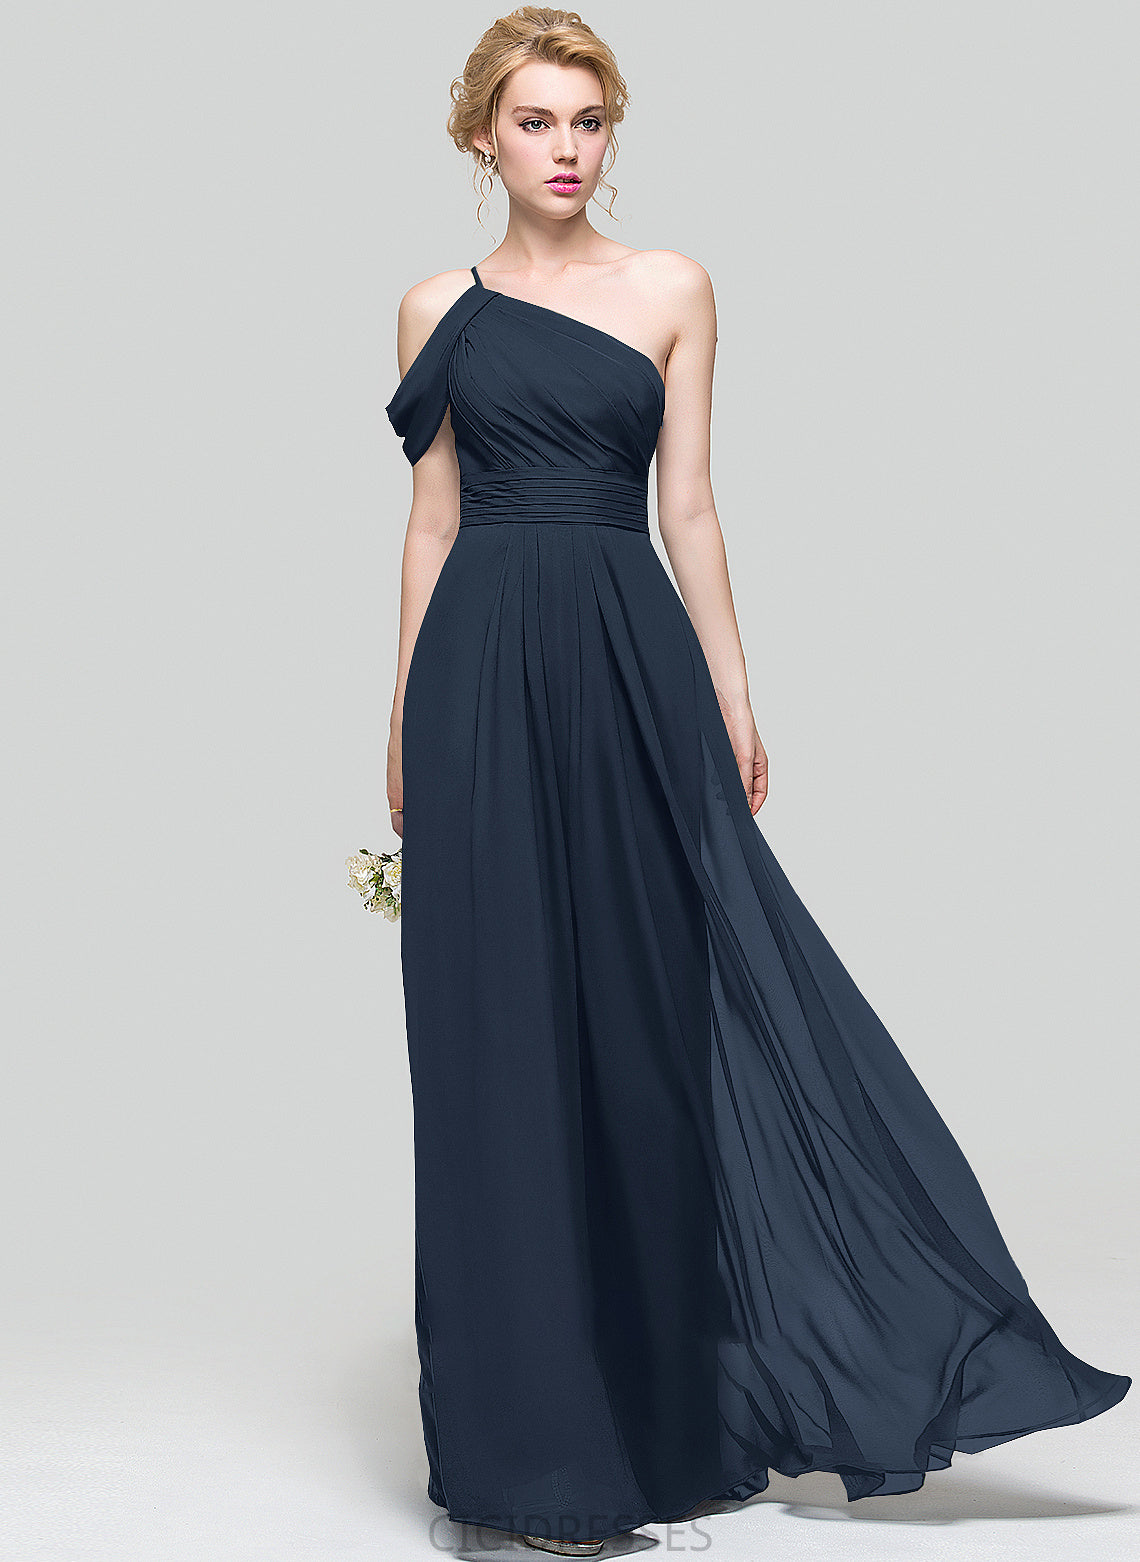 Embellishment Silhouette Length A-Line Neckline One-Shoulder Floor-Length Ruffle Fabric Erica Floor Length Sleeveless Bridesmaid Dresses